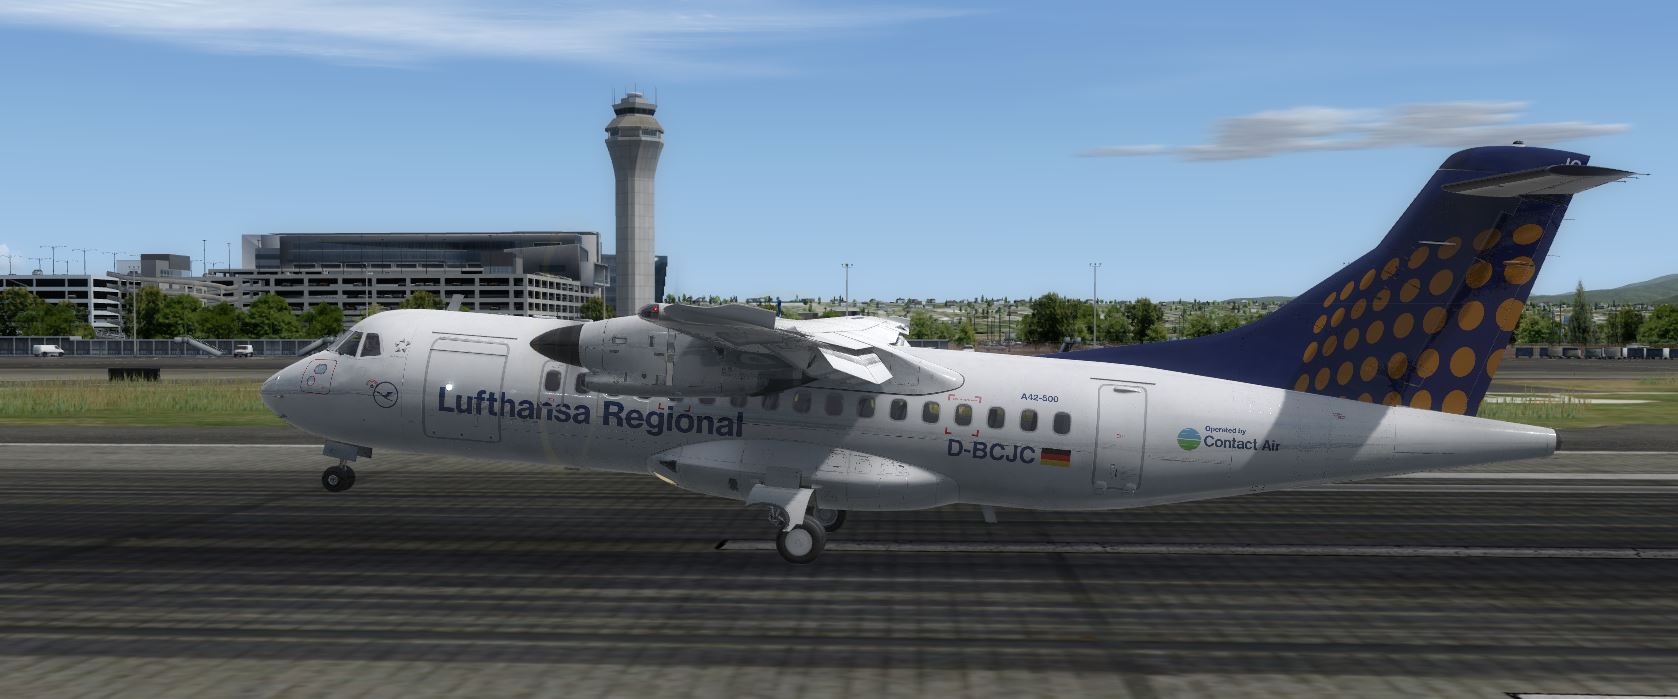 ATR42-500 Lufthansa-1155 